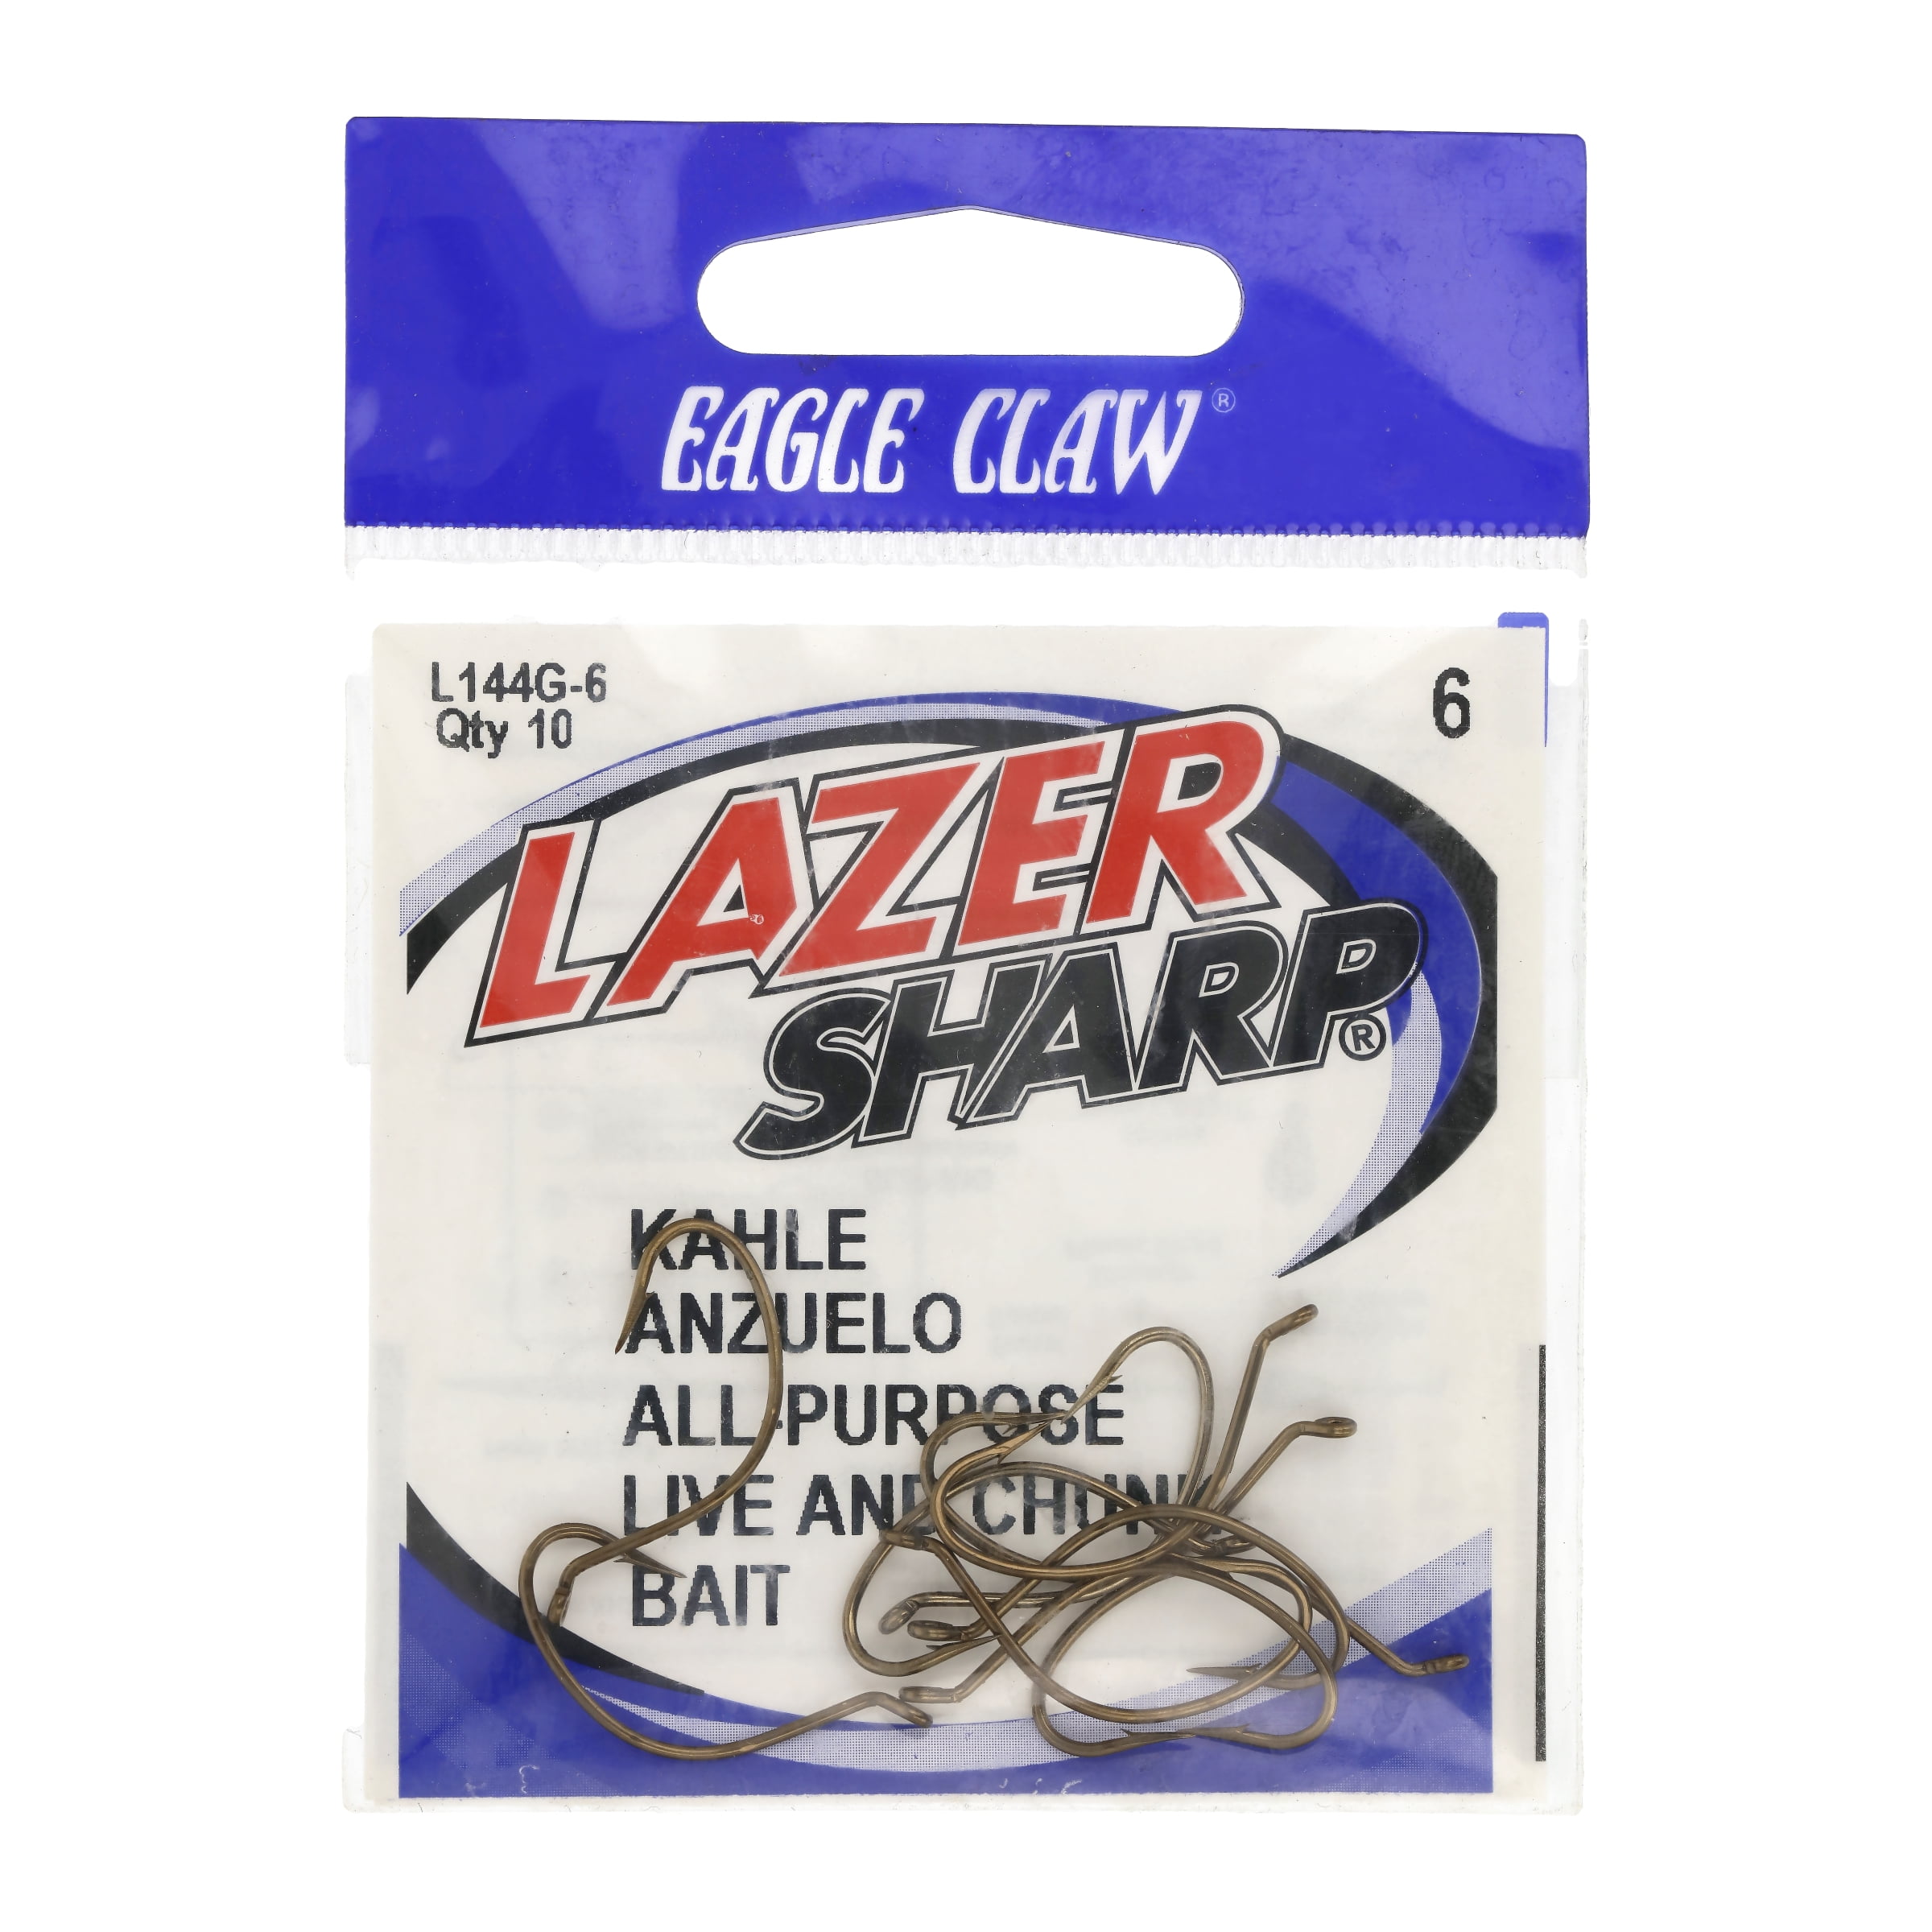 Eagle Claw Lazer Kahle Up Eye Offset Hook L144G-6